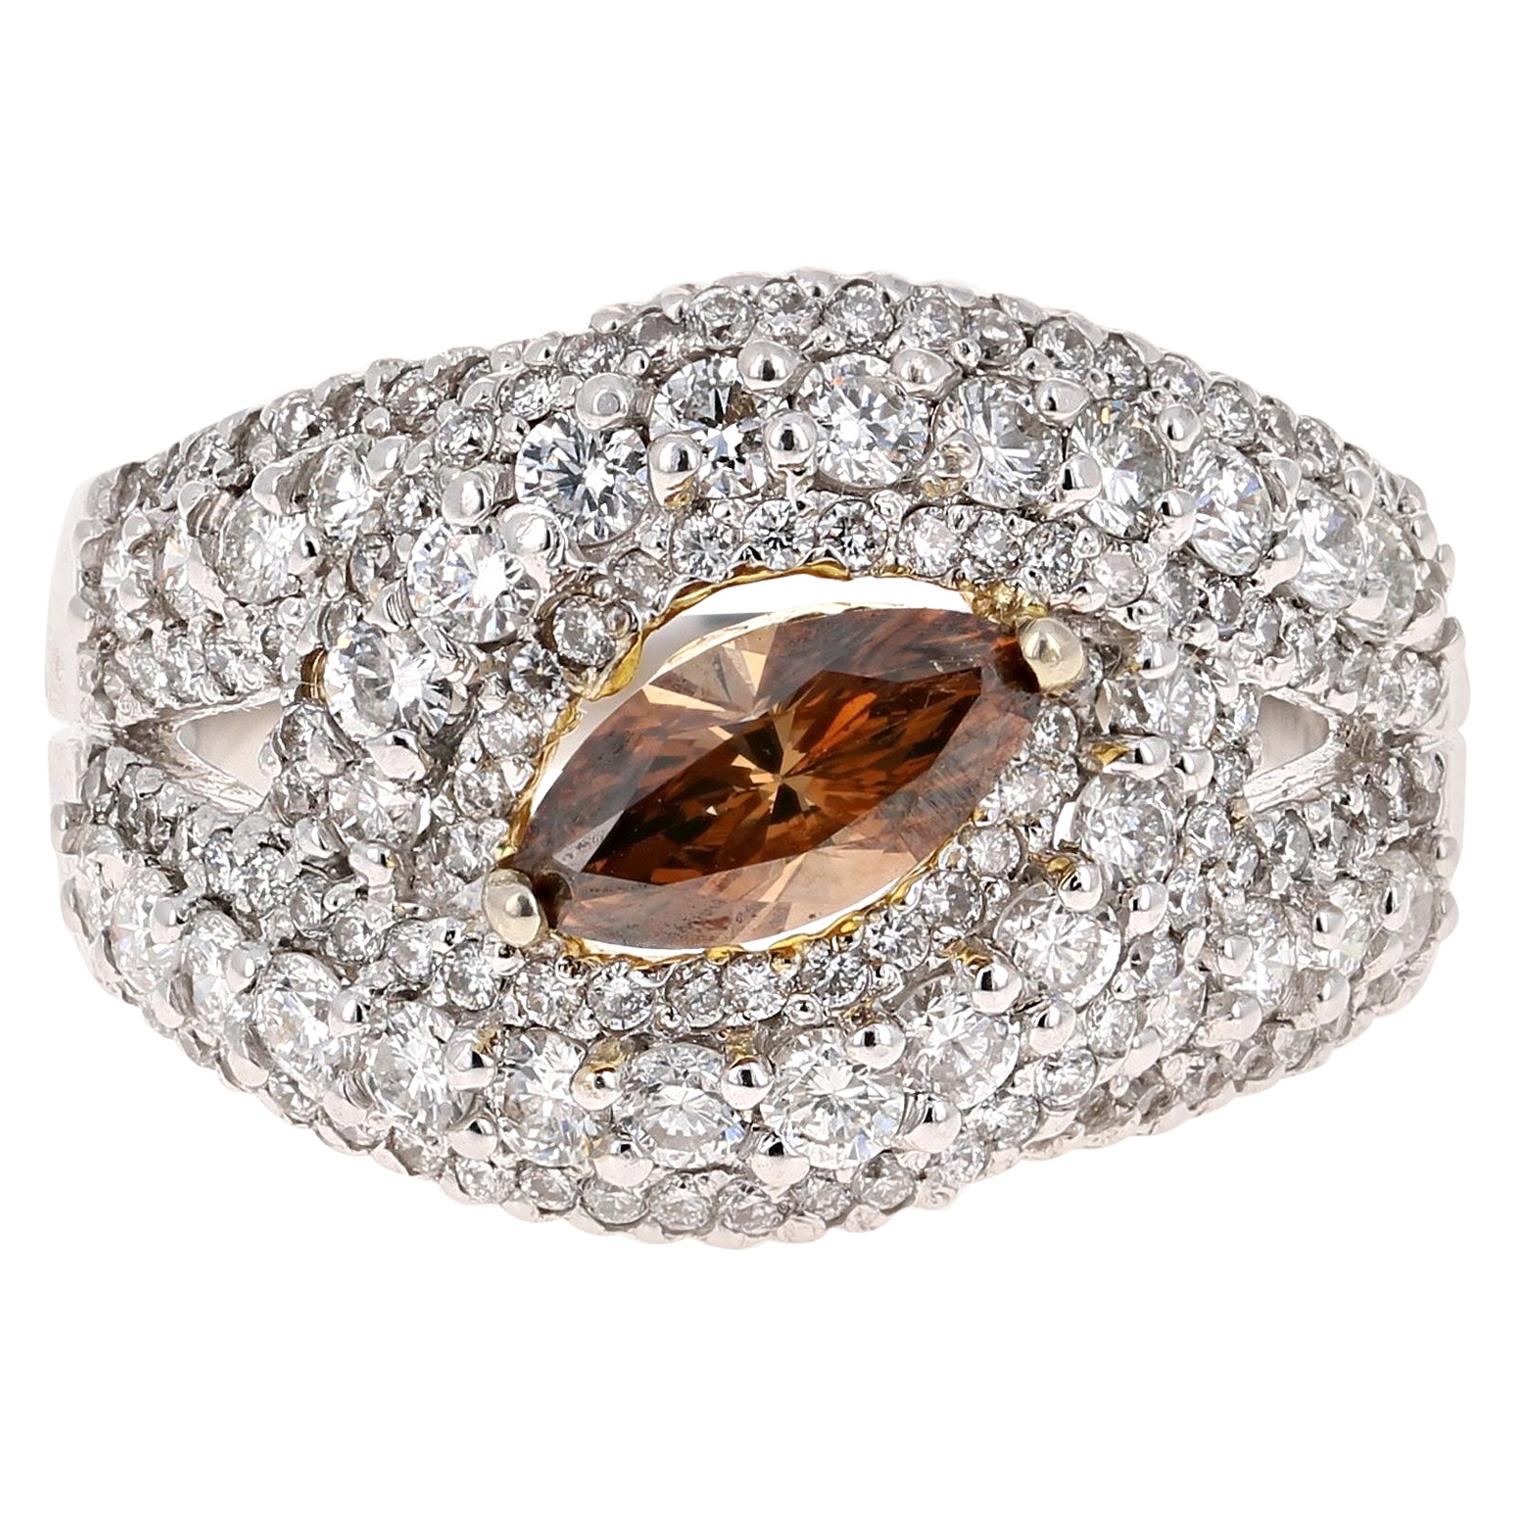 2.11 Carat Natural Fancy Brown Diamond Engagement Ring 14 Karat White Gold For Sale